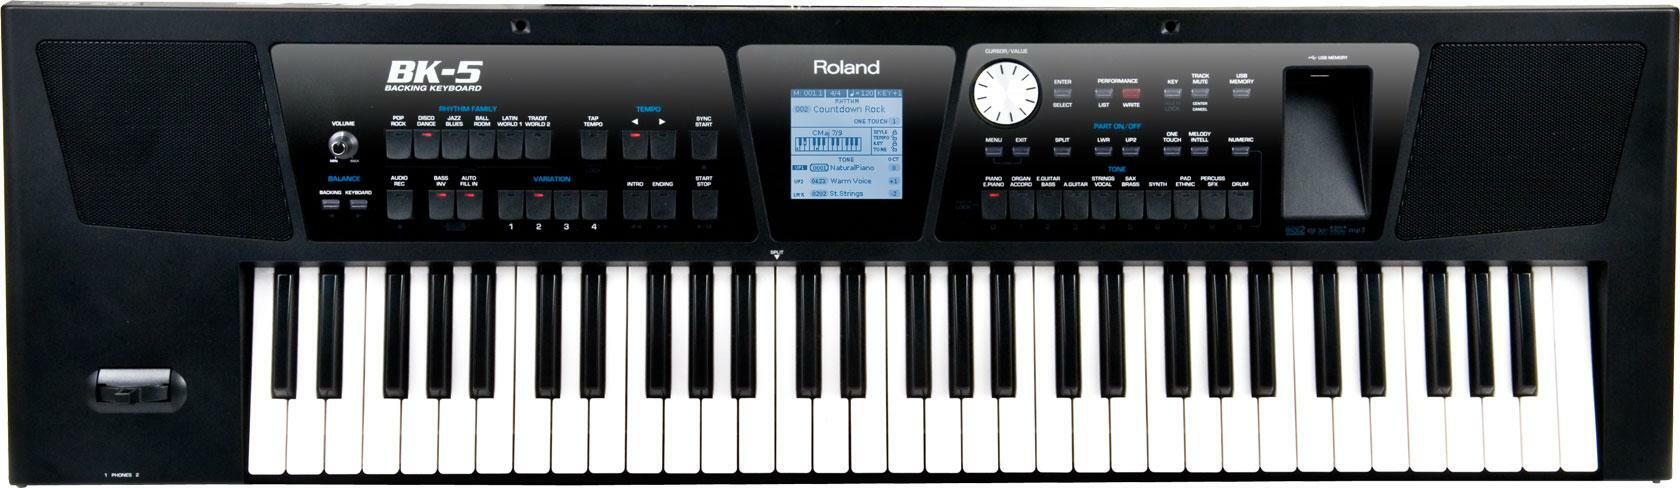 Roland Bk5 - Entertainer Keyboard - Main picture